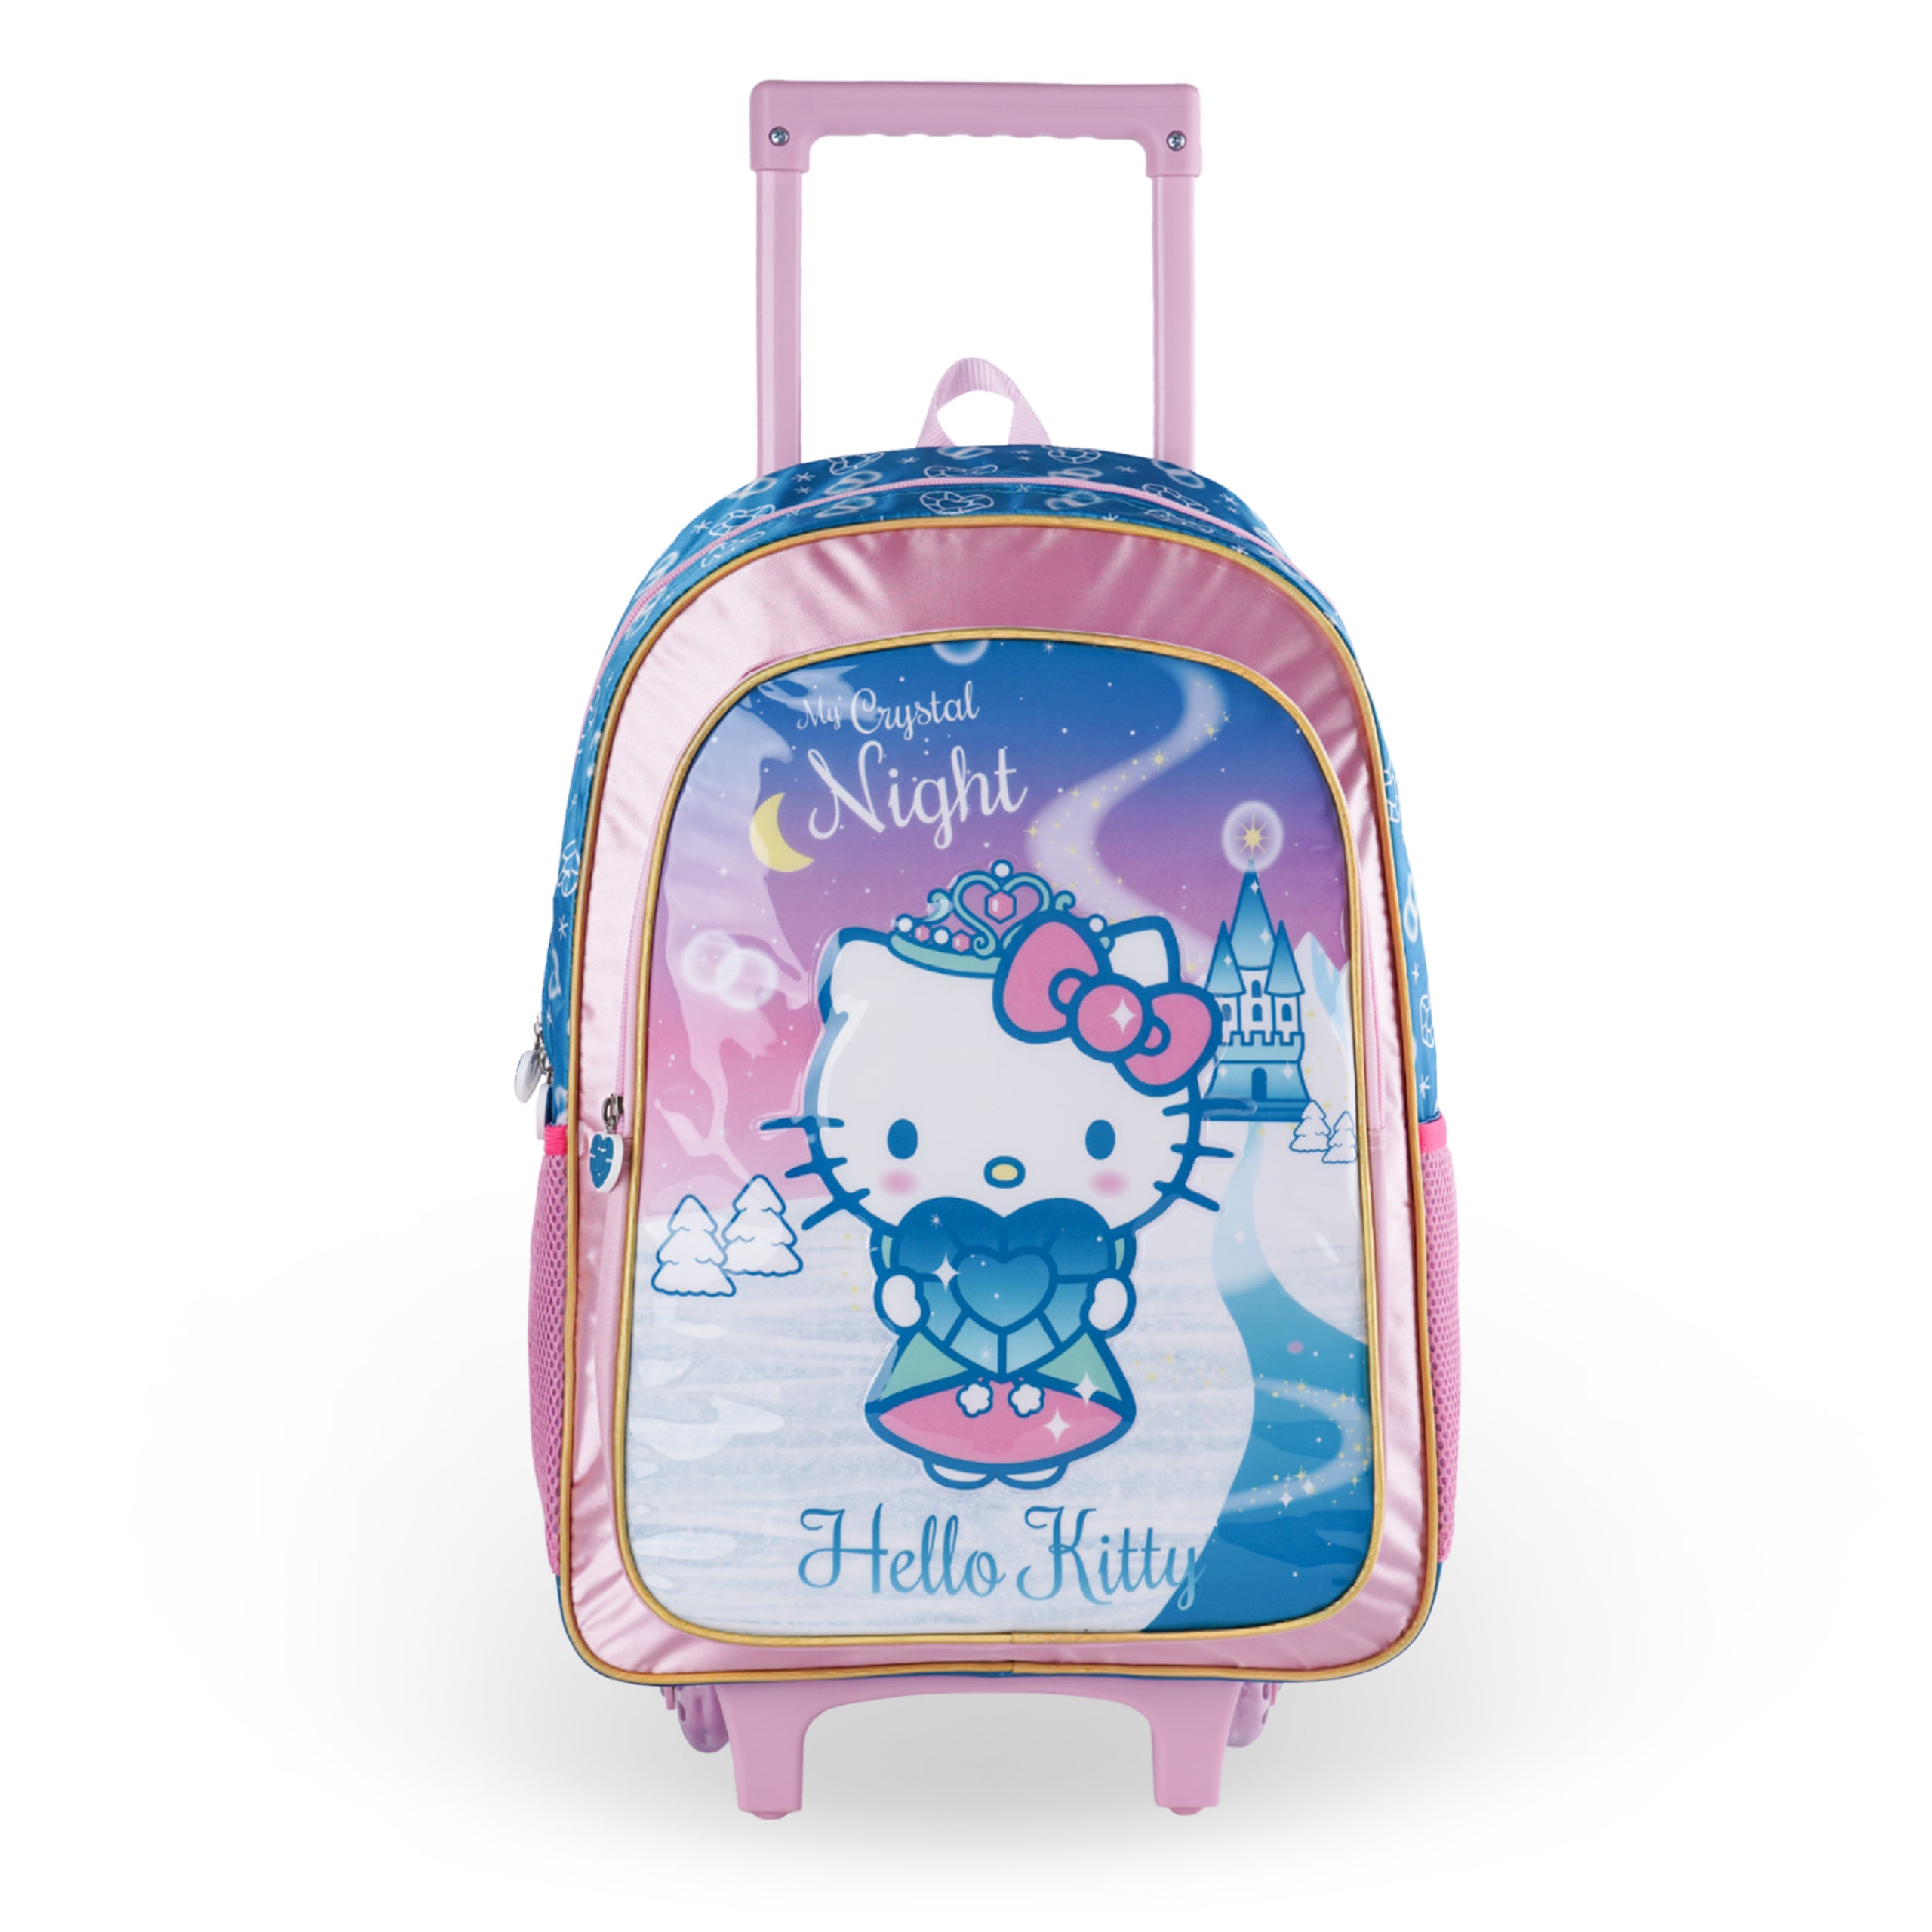 Sanrio Hello Kitty My Crystal Night 3in1 Trolley Box set 18"